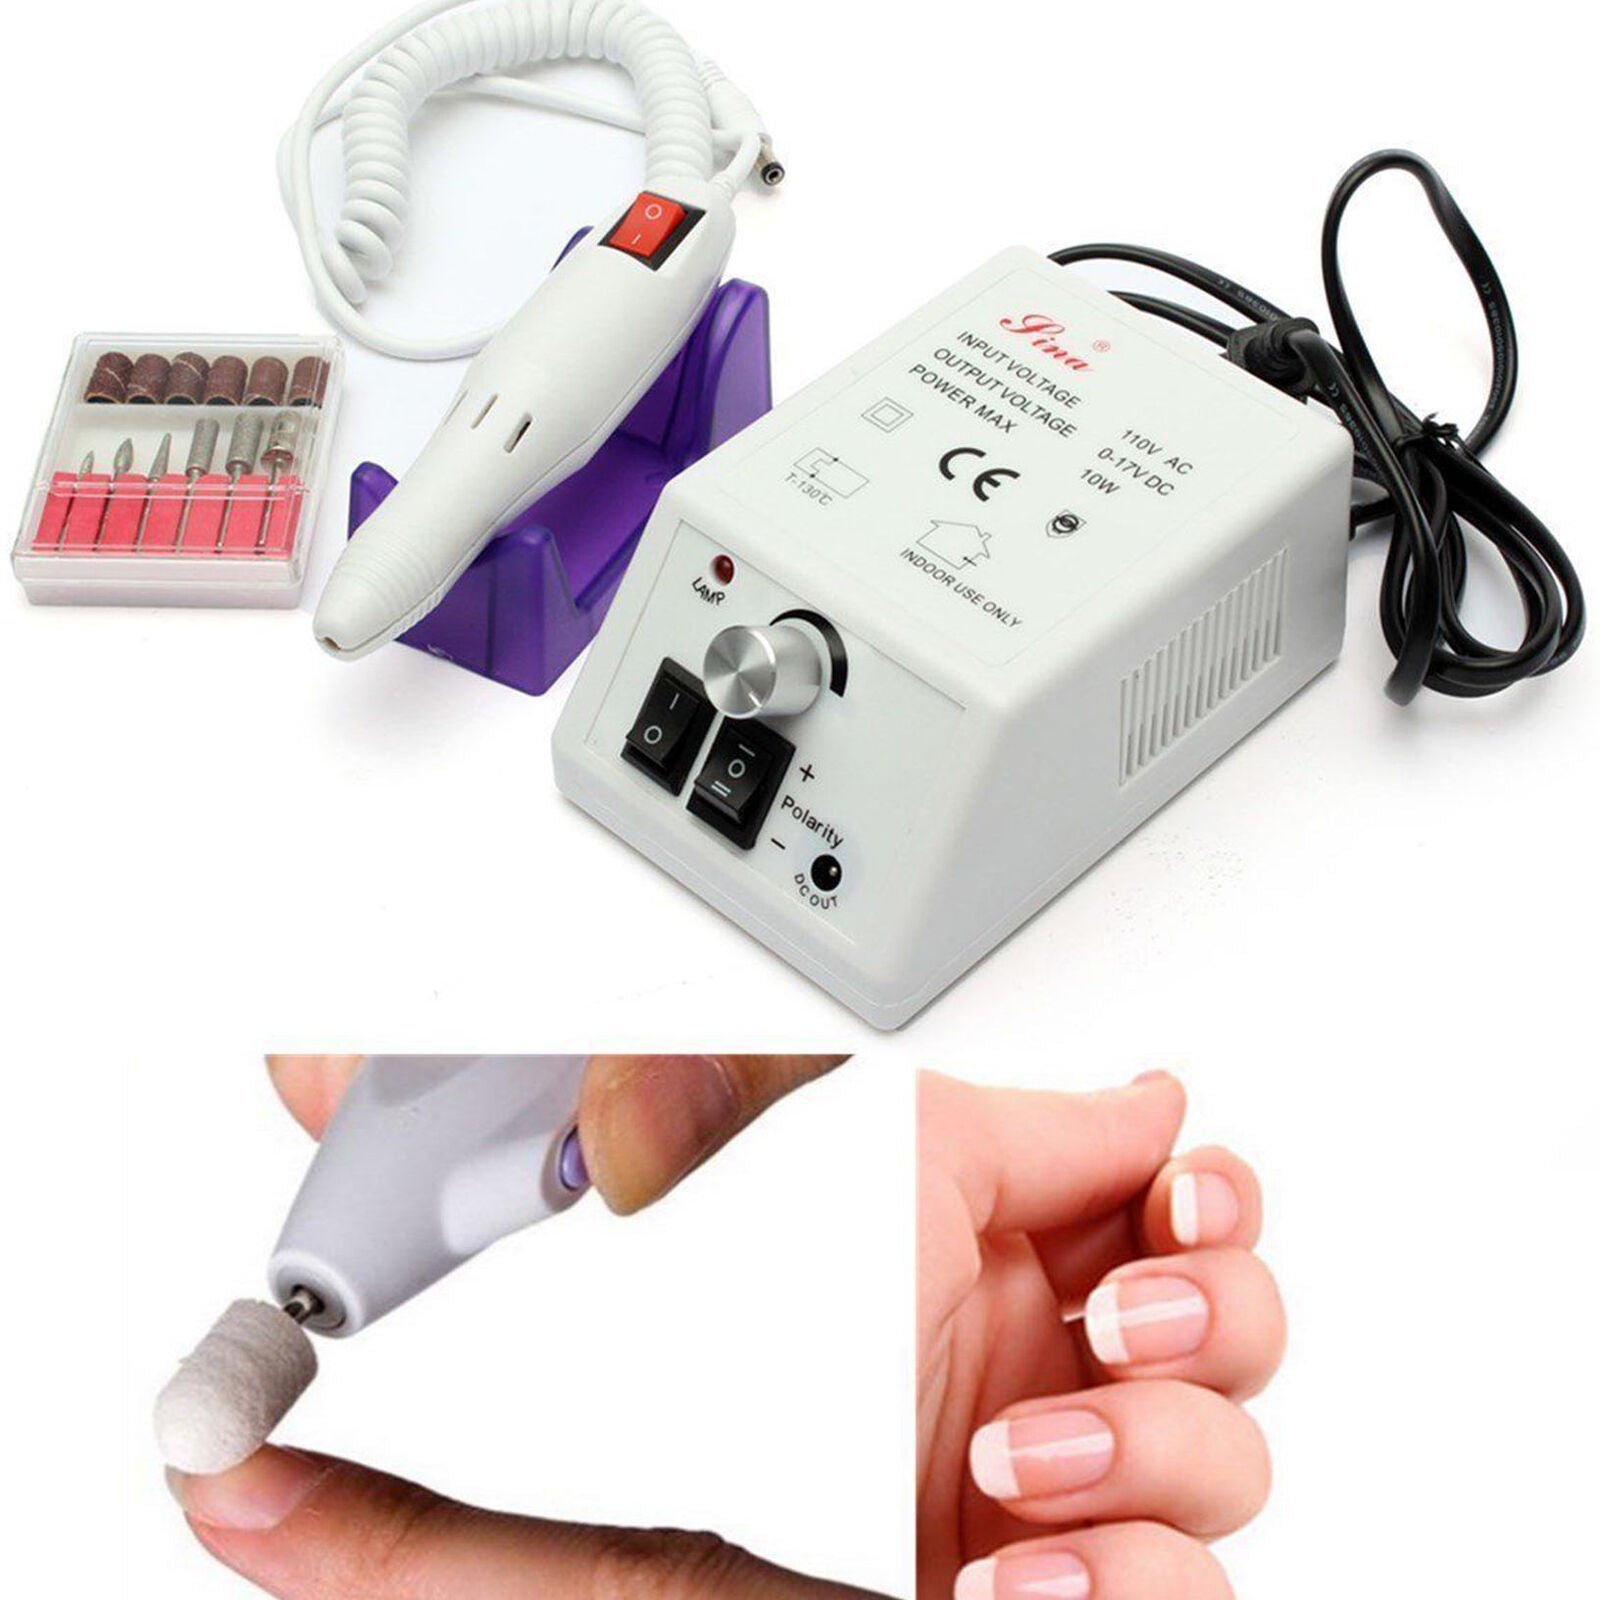 Profession Manicure Pedicure Electric Drill File Nail Art Pen Machine Kit Set